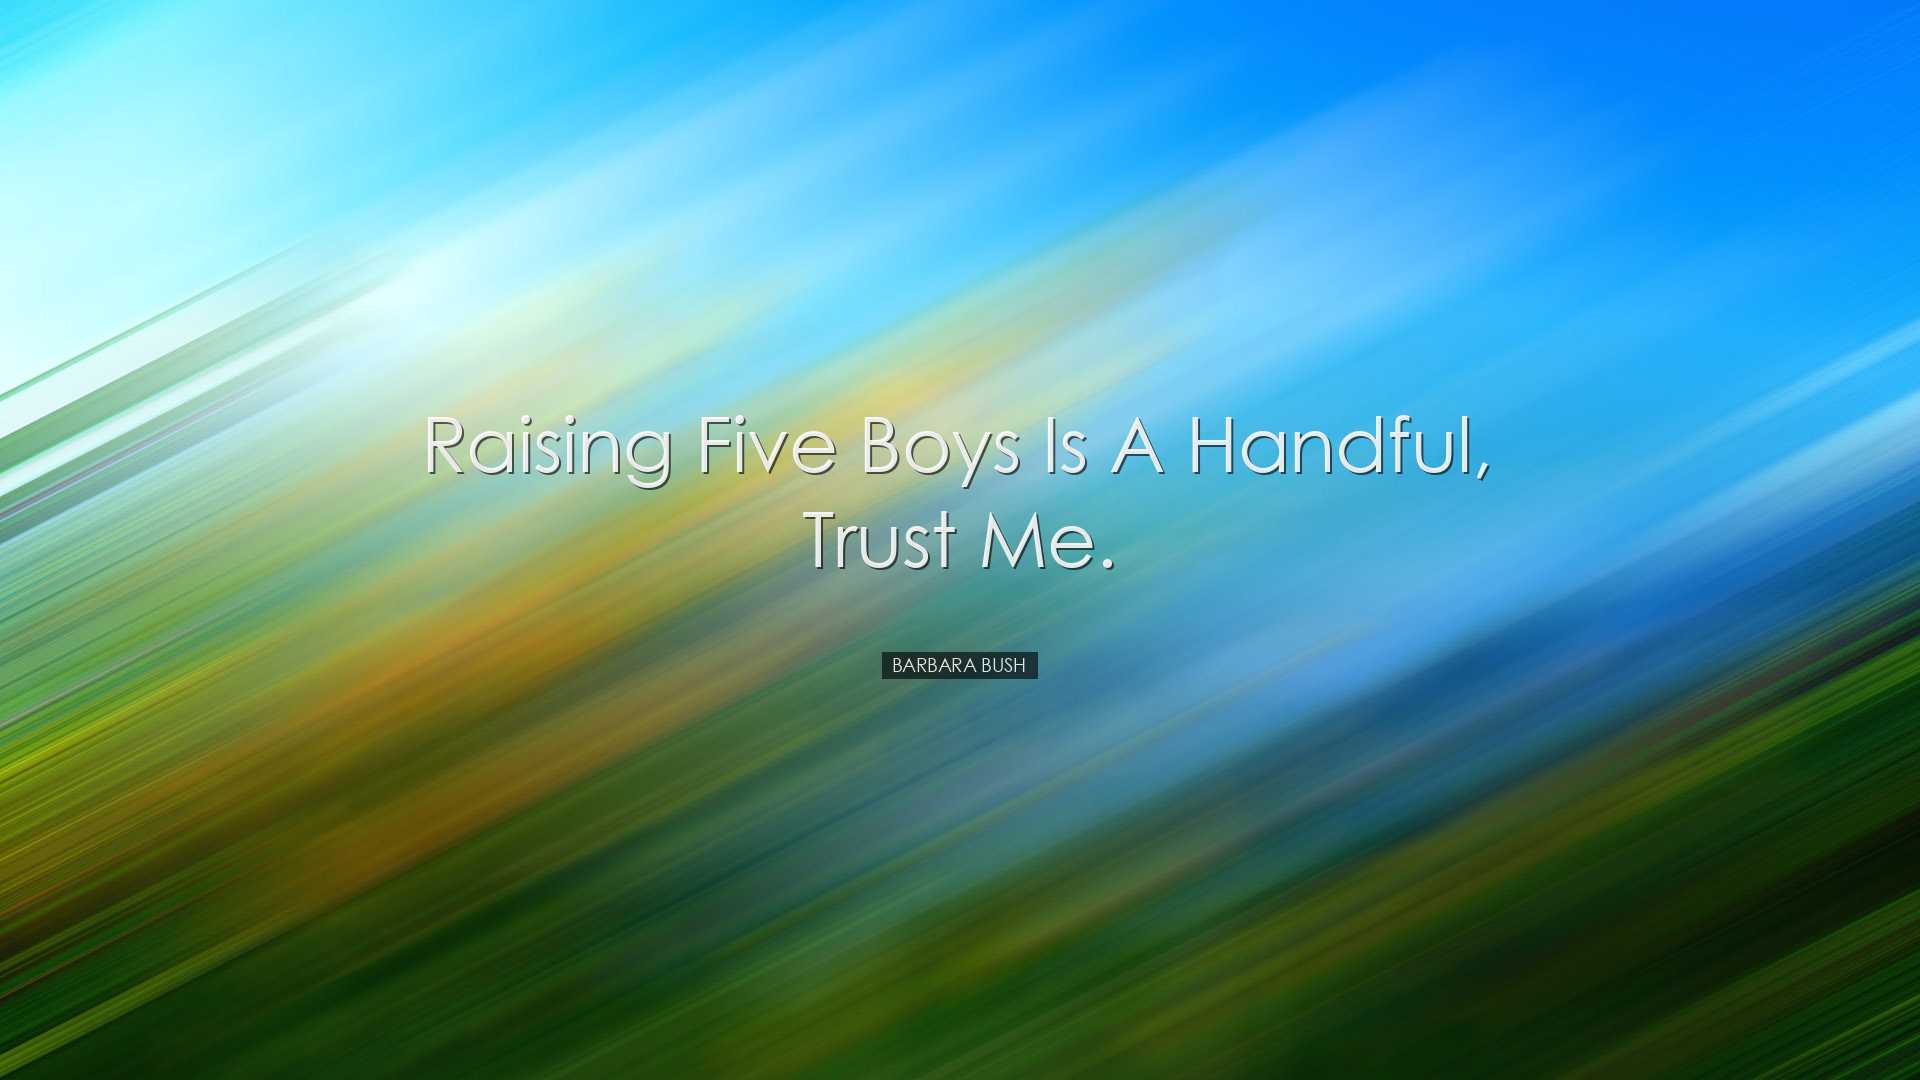 Raising five boys is a handful, trust me. - Barbara Bush